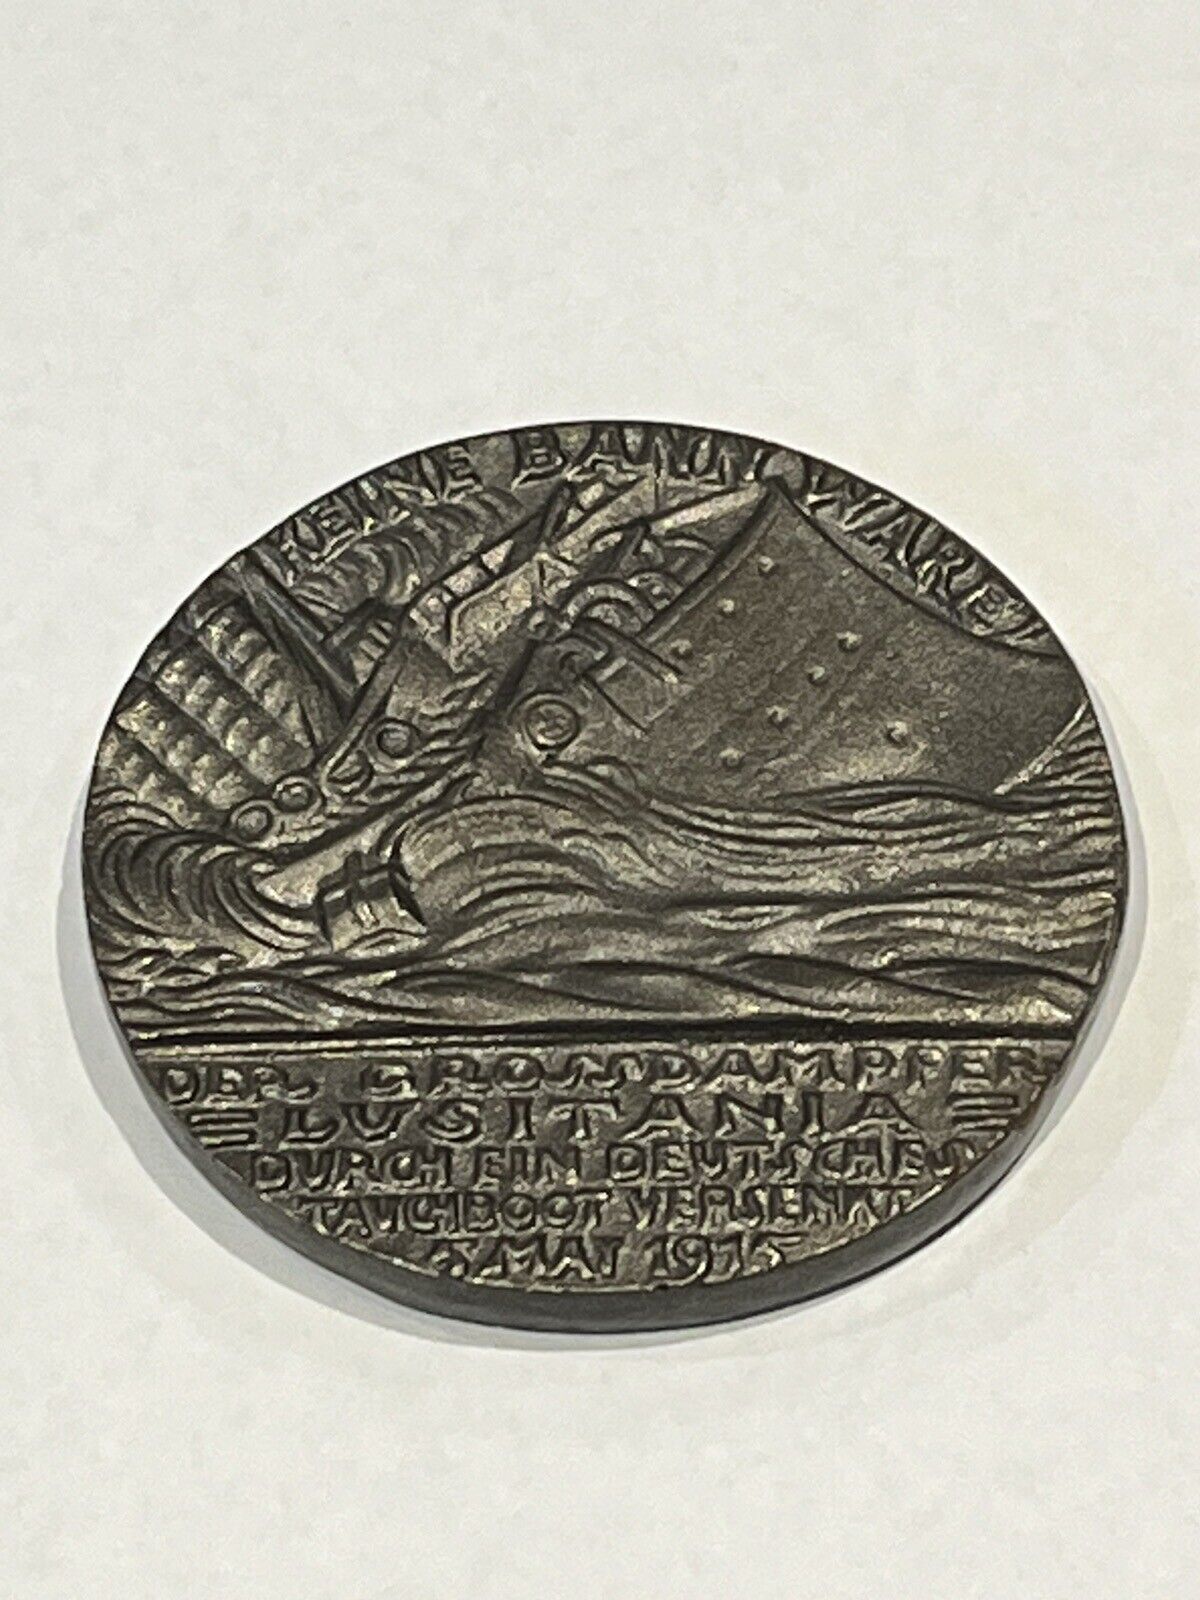 The Lusitania German Medal